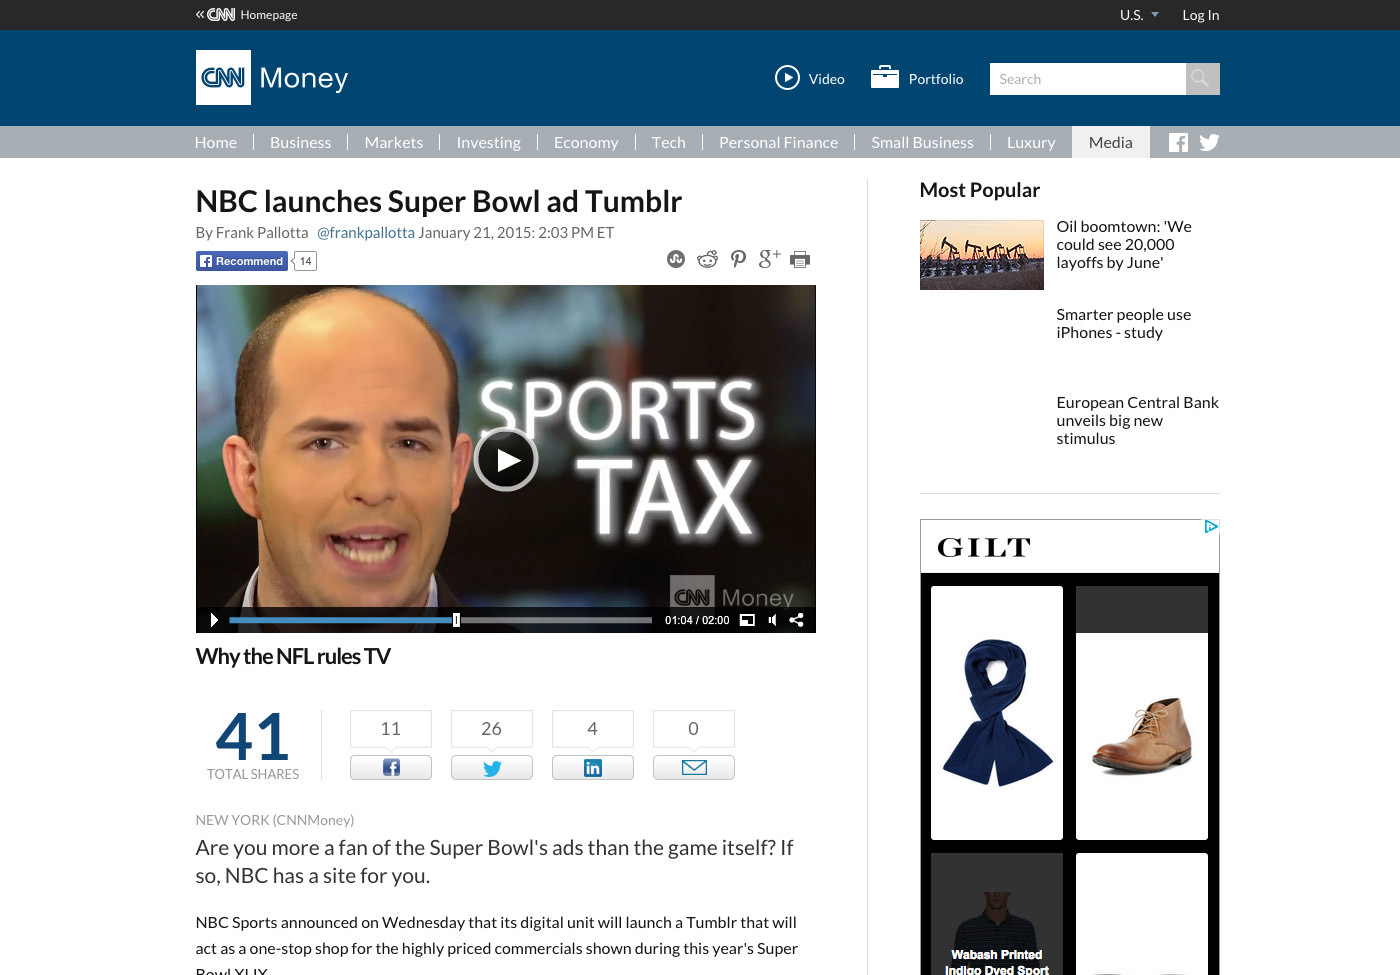 CNN Money coverage of the NBC Sports Super Bowl site: "NBC launches Super Bowl ad Tumblr"